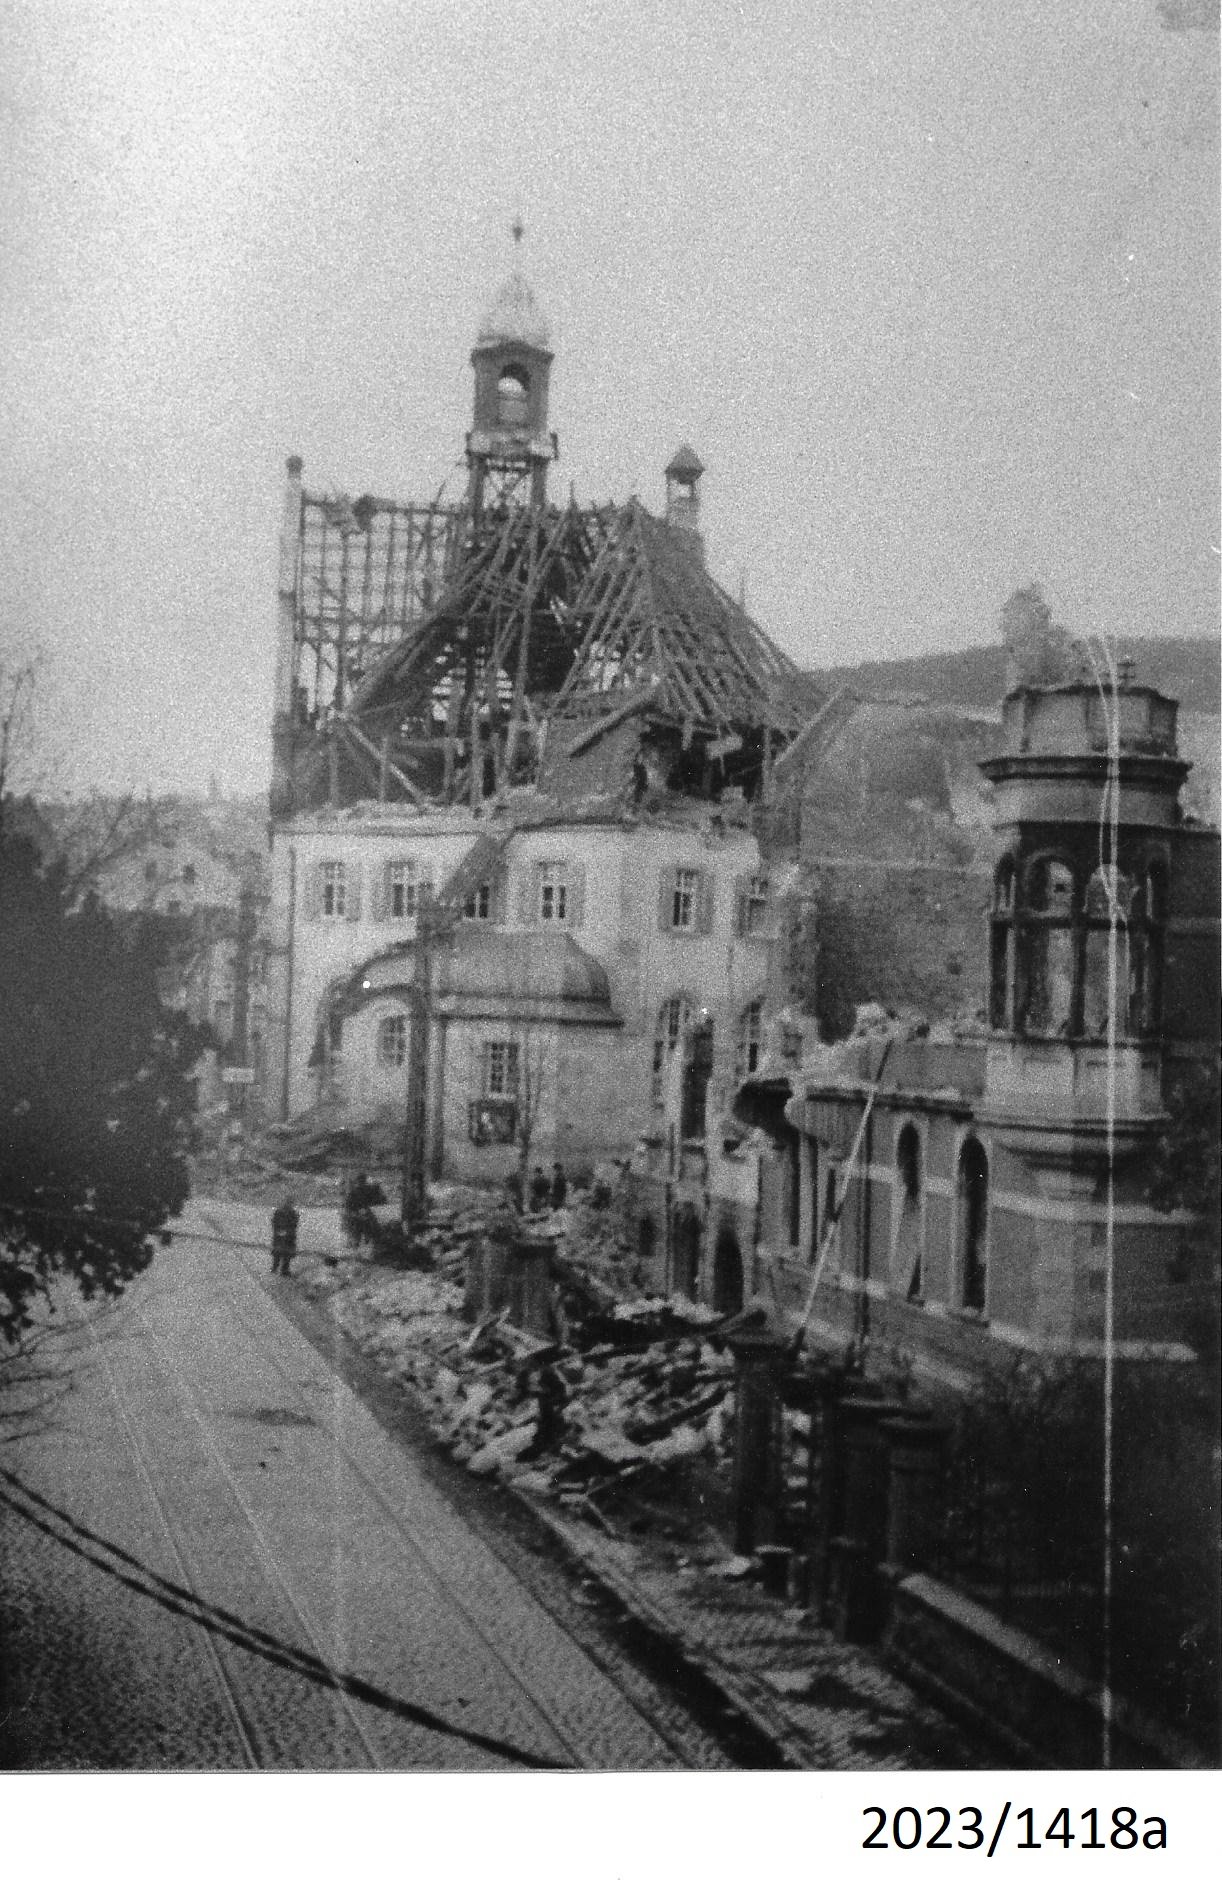 Bad Dürkheim, Postgebäude nach dem Luftangriff, März 1945 (Stadtmuseum Bad Dürkheim im Kulturzentrum Haus Catoir CC BY-NC-SA)